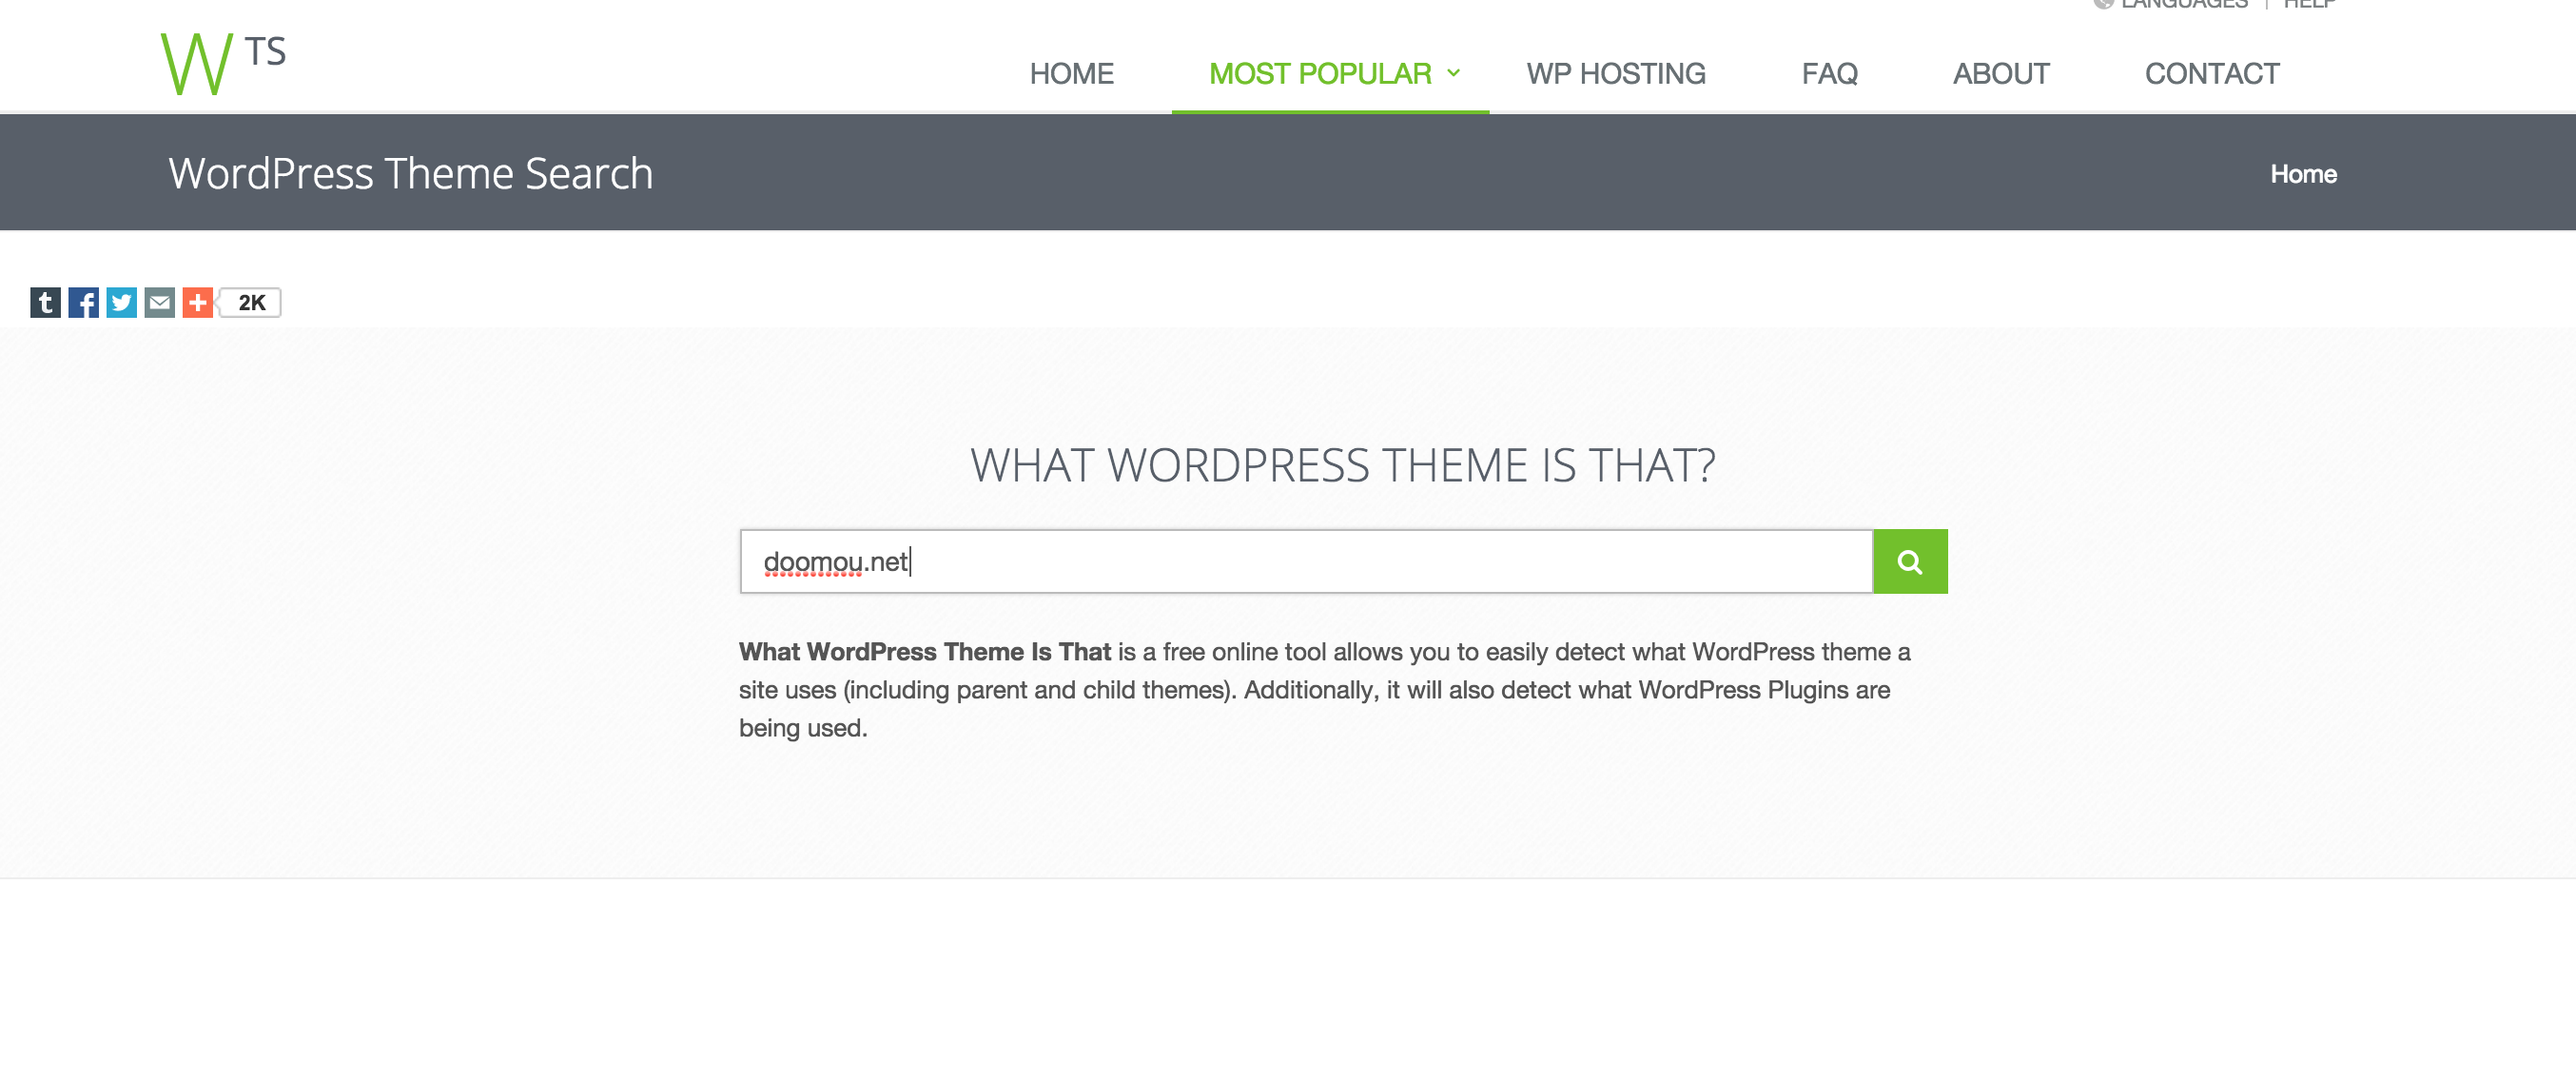 WordPressで作られたサイトのテーマやプラグインを簡単に調べる方法とは？